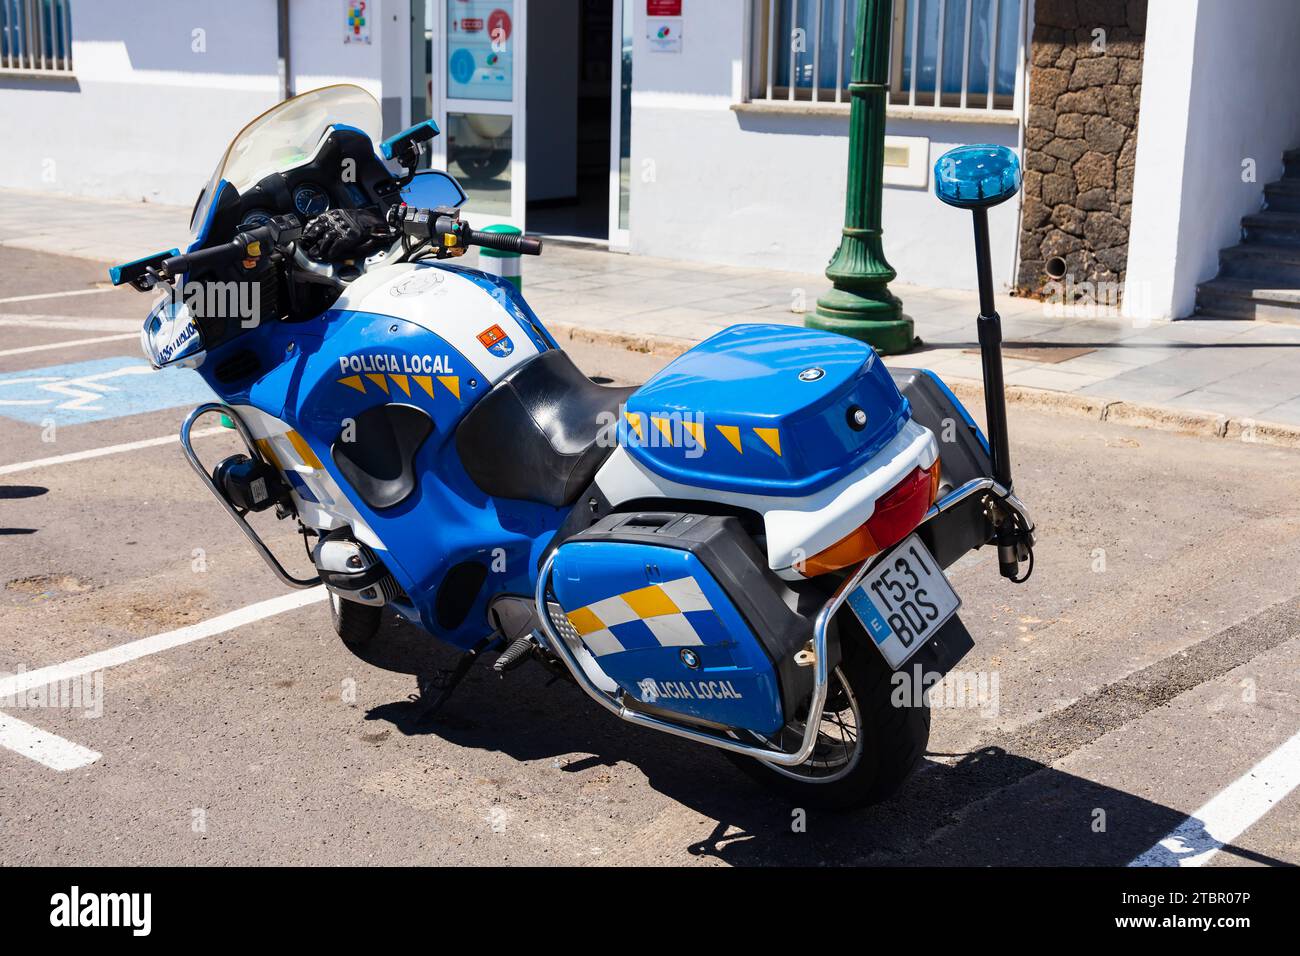 BMW Policia Local, police motorcycle parked outside the police station, Av de Vargas, Arrecife, Lanzarote, Las Palmas, Spain Stock Photo